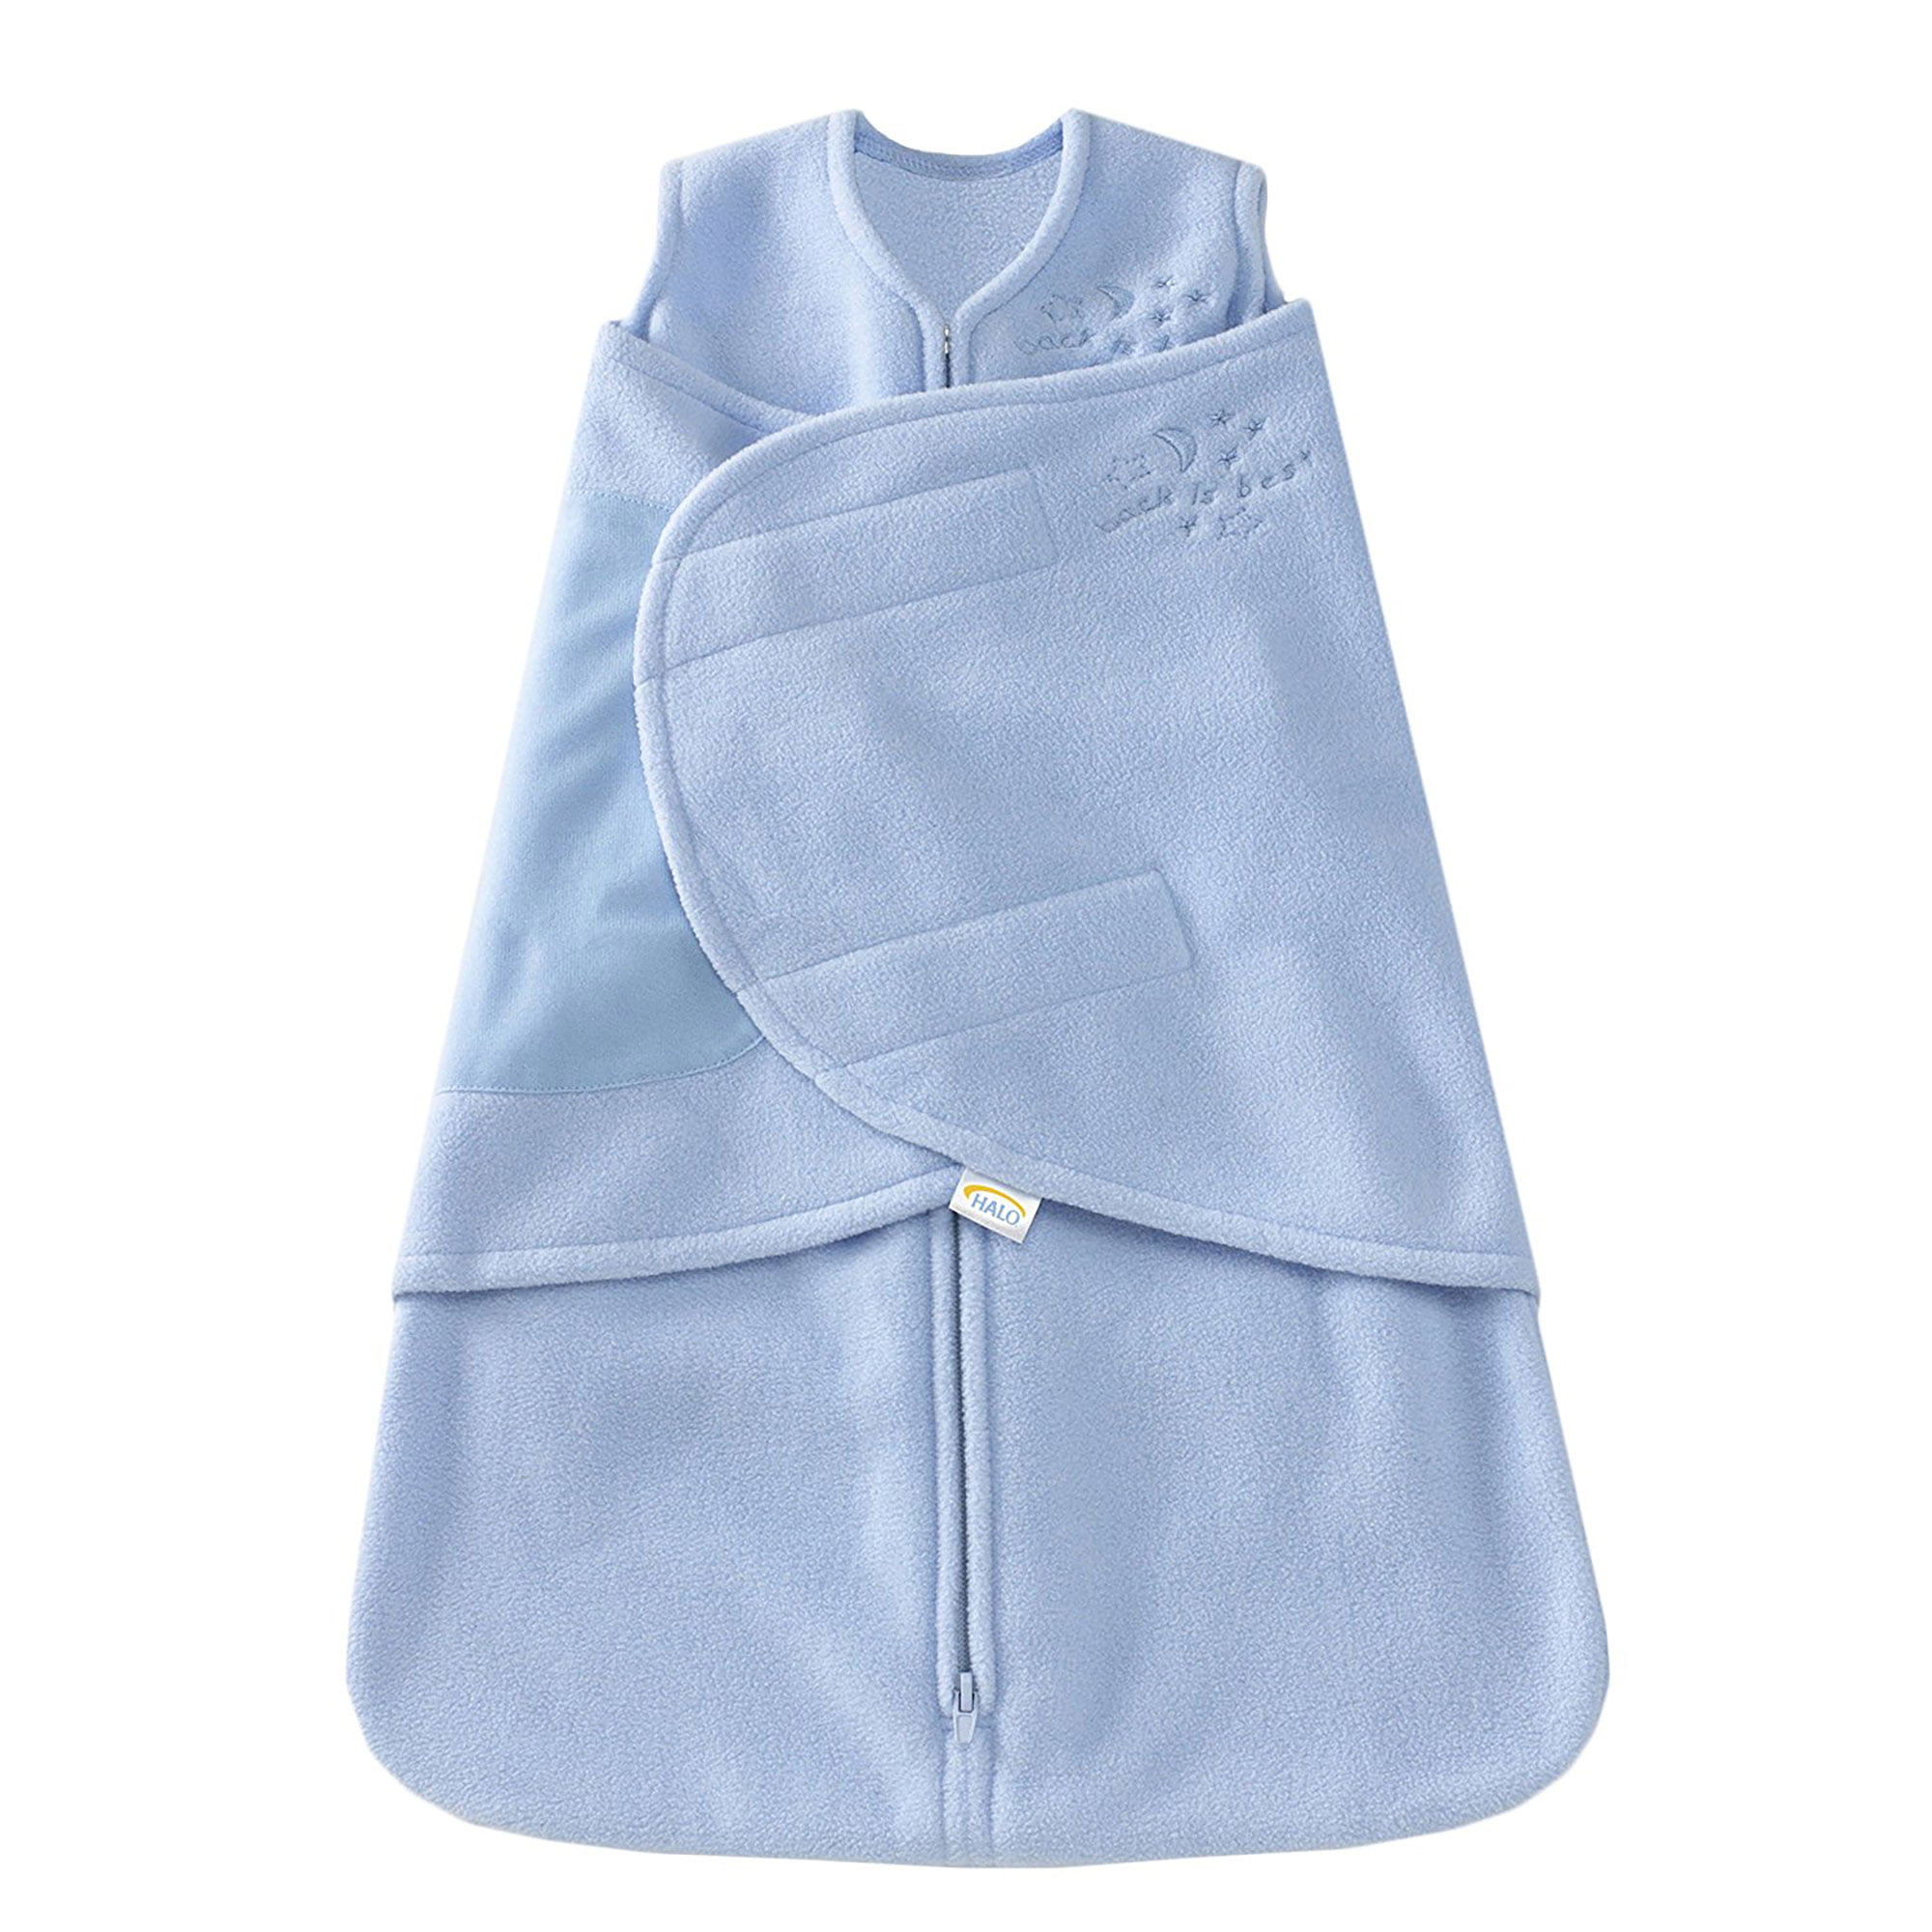 Halo Sleepsack Wearable Cotton Blanket 0-6 Months, Small, Dark Blue with Dog 